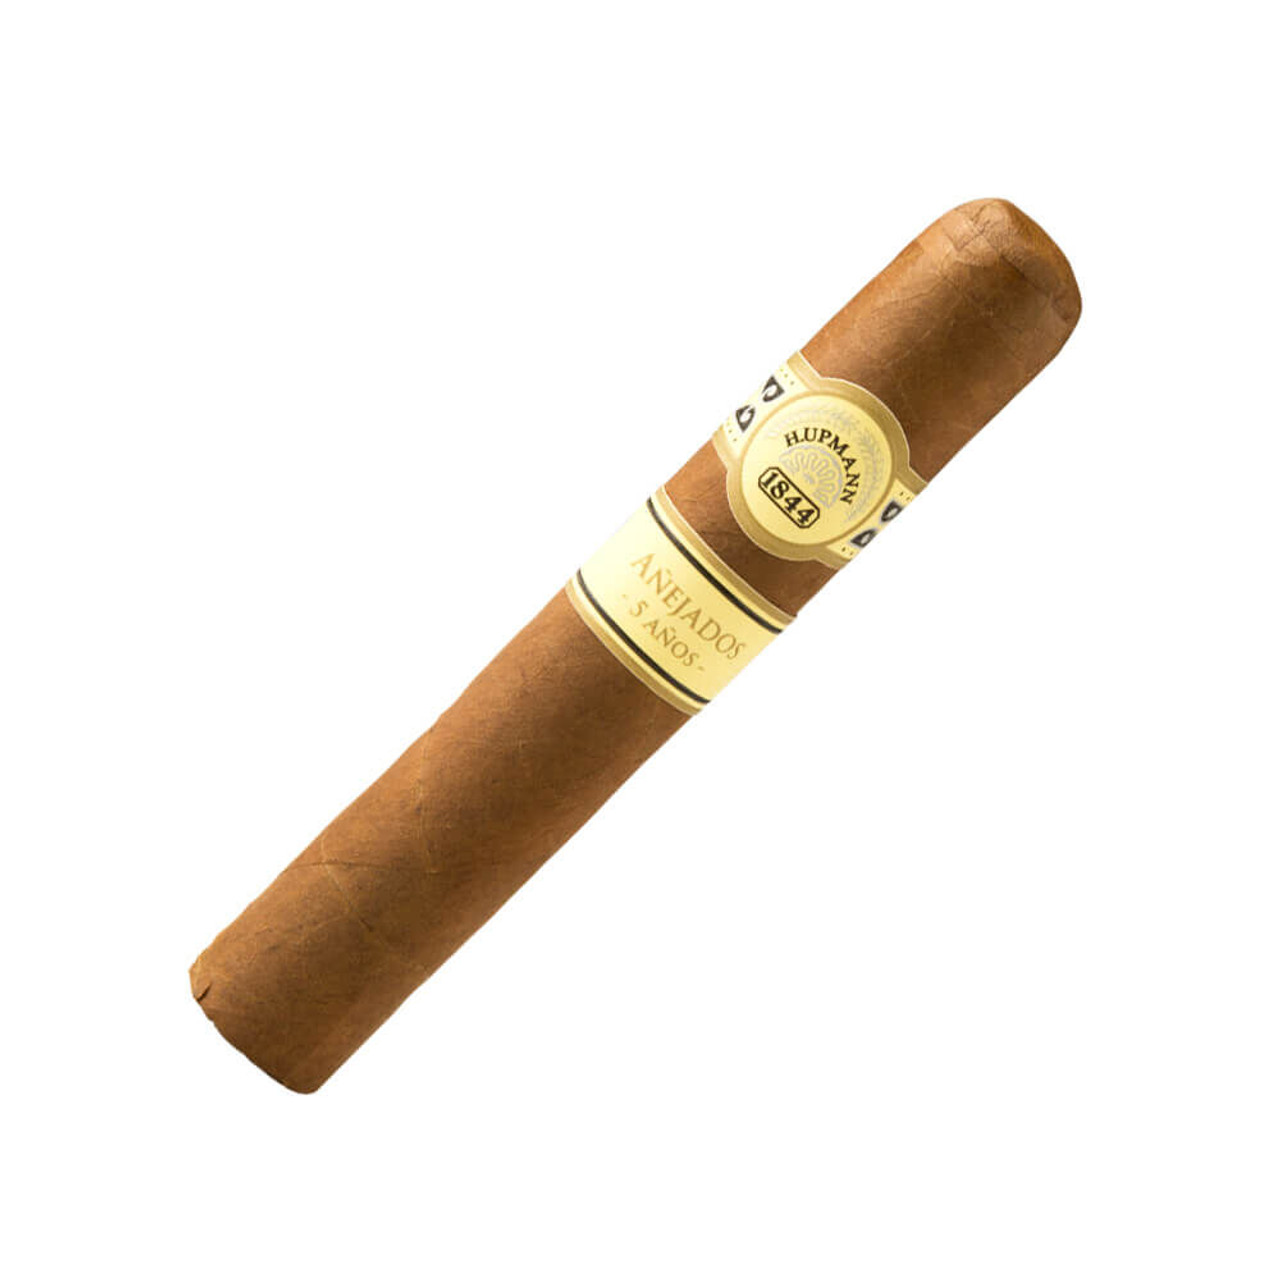 H. Upmann Anejados Robusto Cigars - 5 x 52 (Box of 10) Single